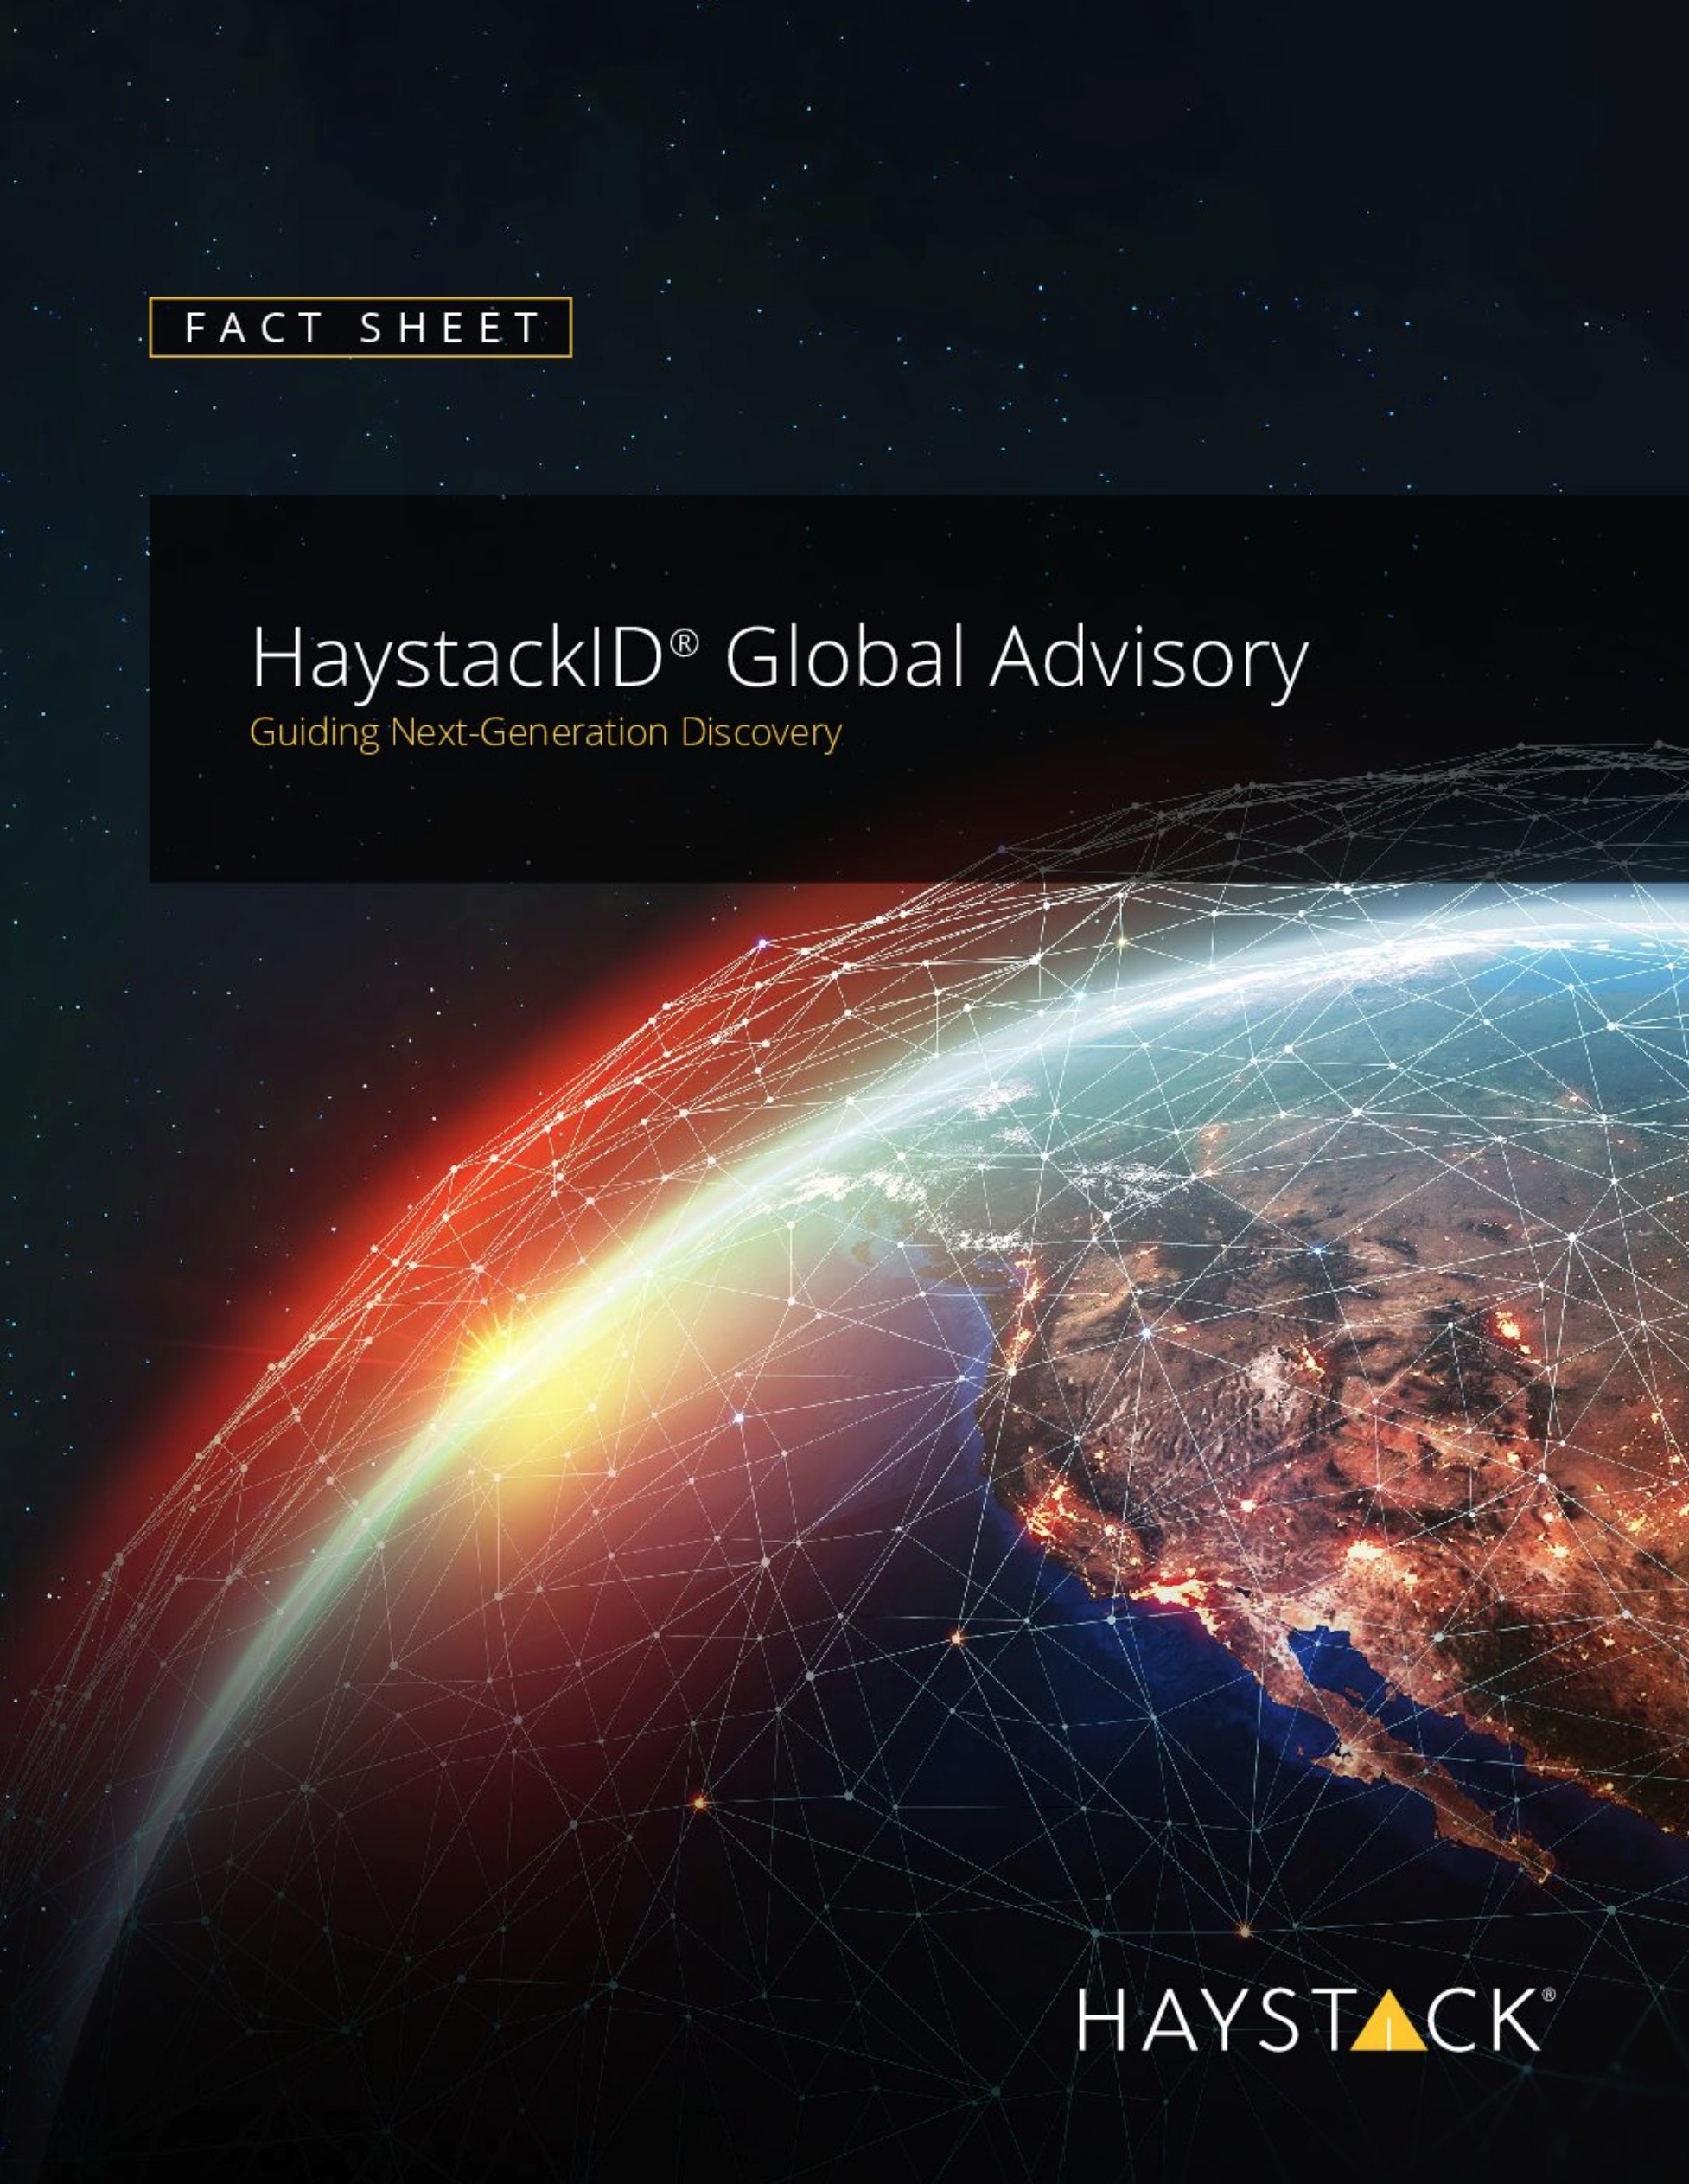 HaystackID Global Advisory